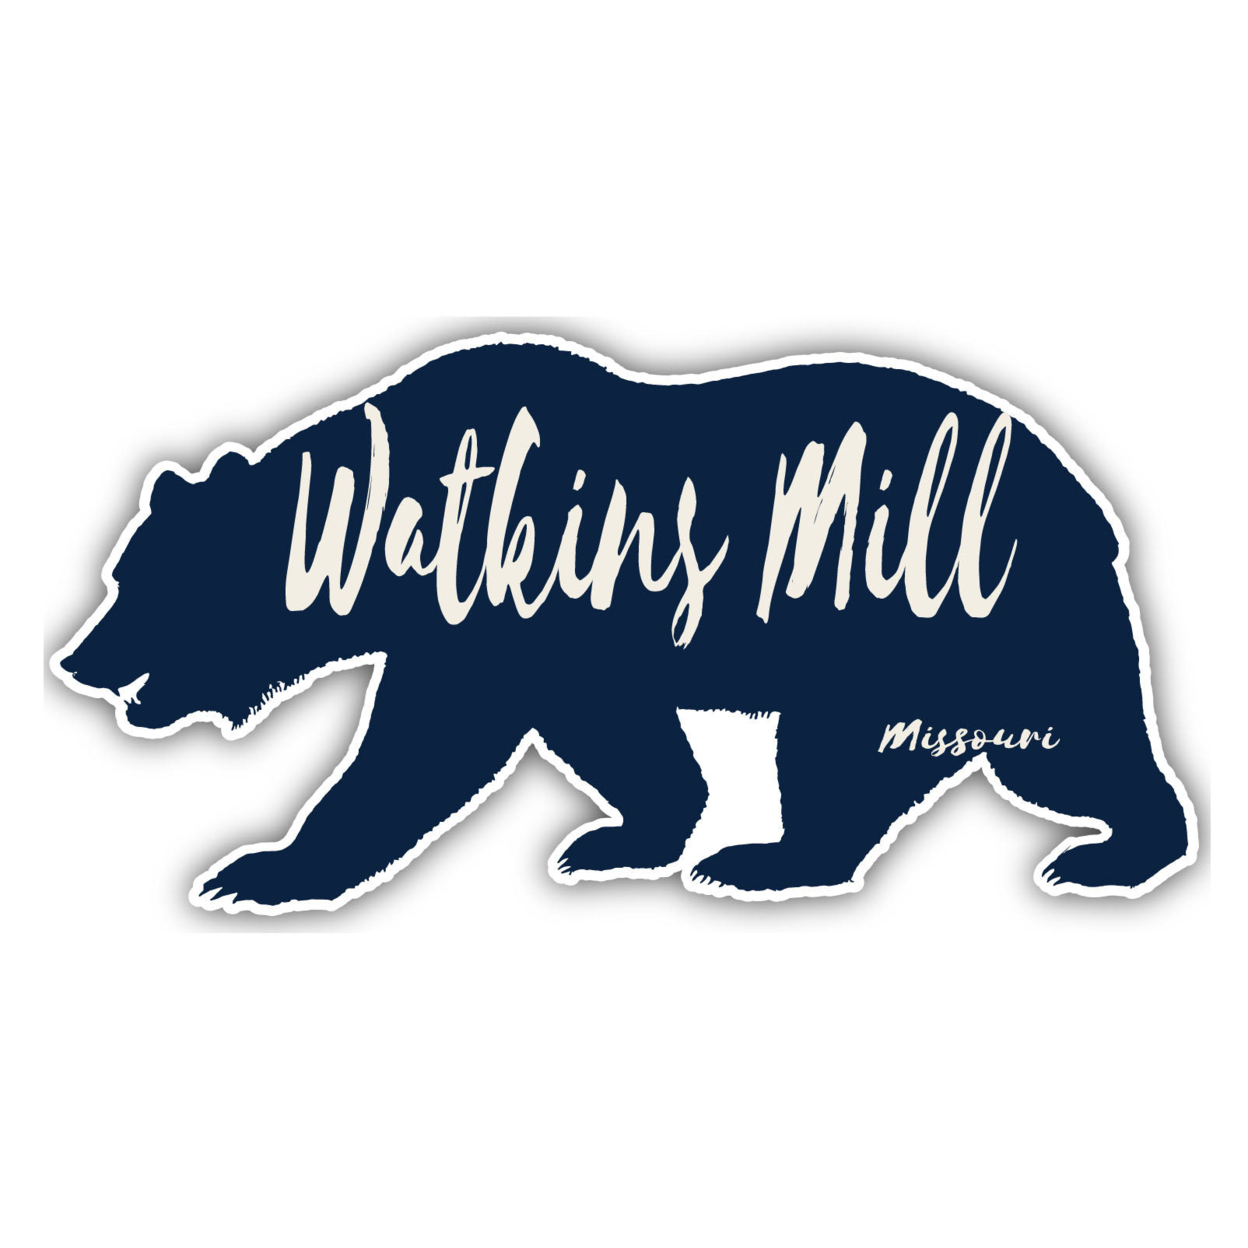 Watkins Mill Missouri Souvenir Decorative Stickers (Choose Theme And Size) - Single Unit, 4-Inch, Bear